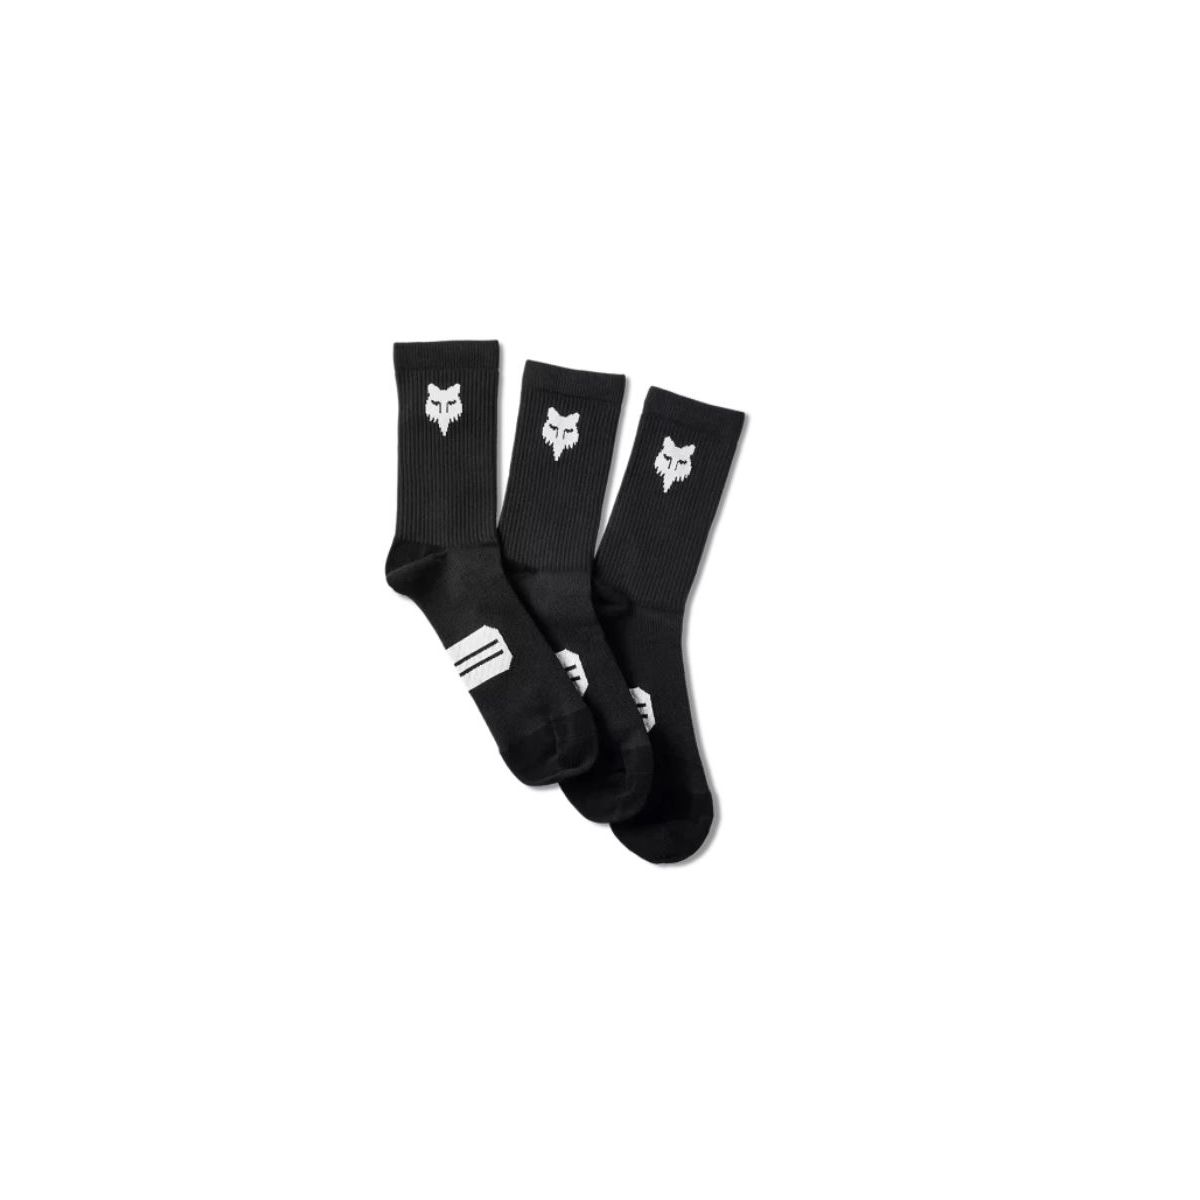 Pack 3 calcetines Fox Ranger 6" color negro/blanco 31528-001